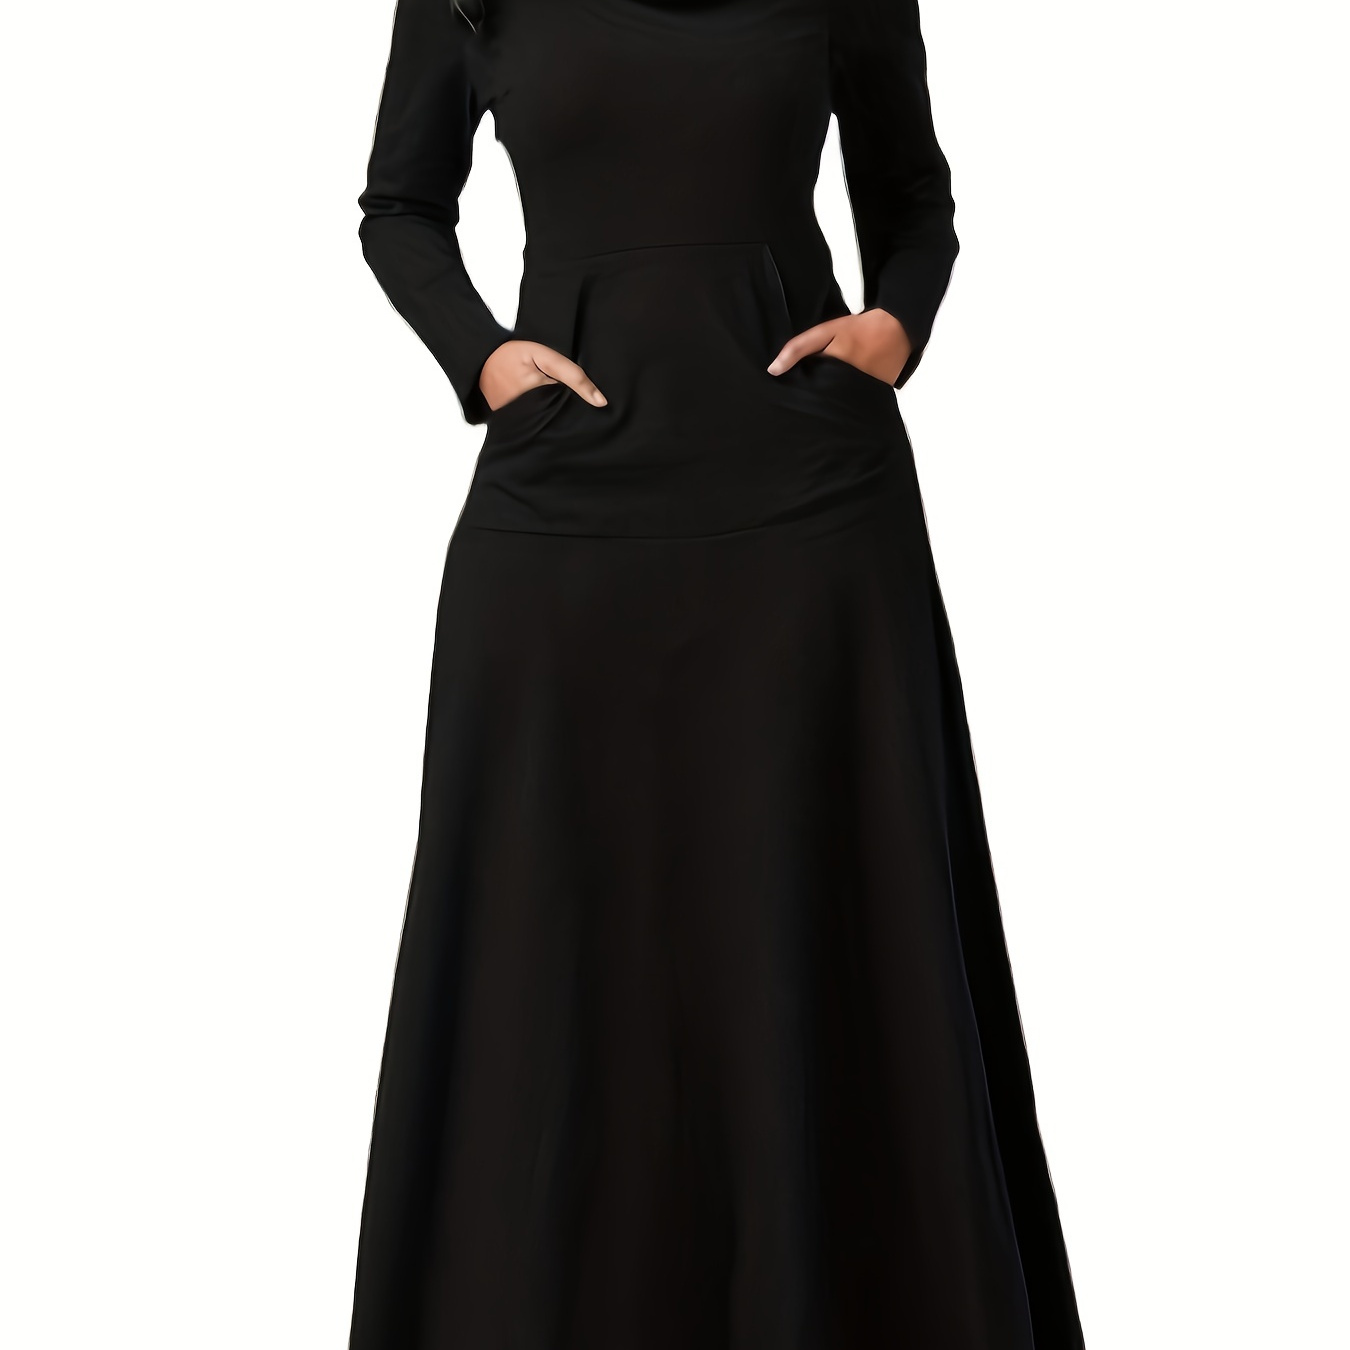 

Pile Collar Pocket Front Dress, Elegant Long Sleeve Maxi Dress, Women's Clothing